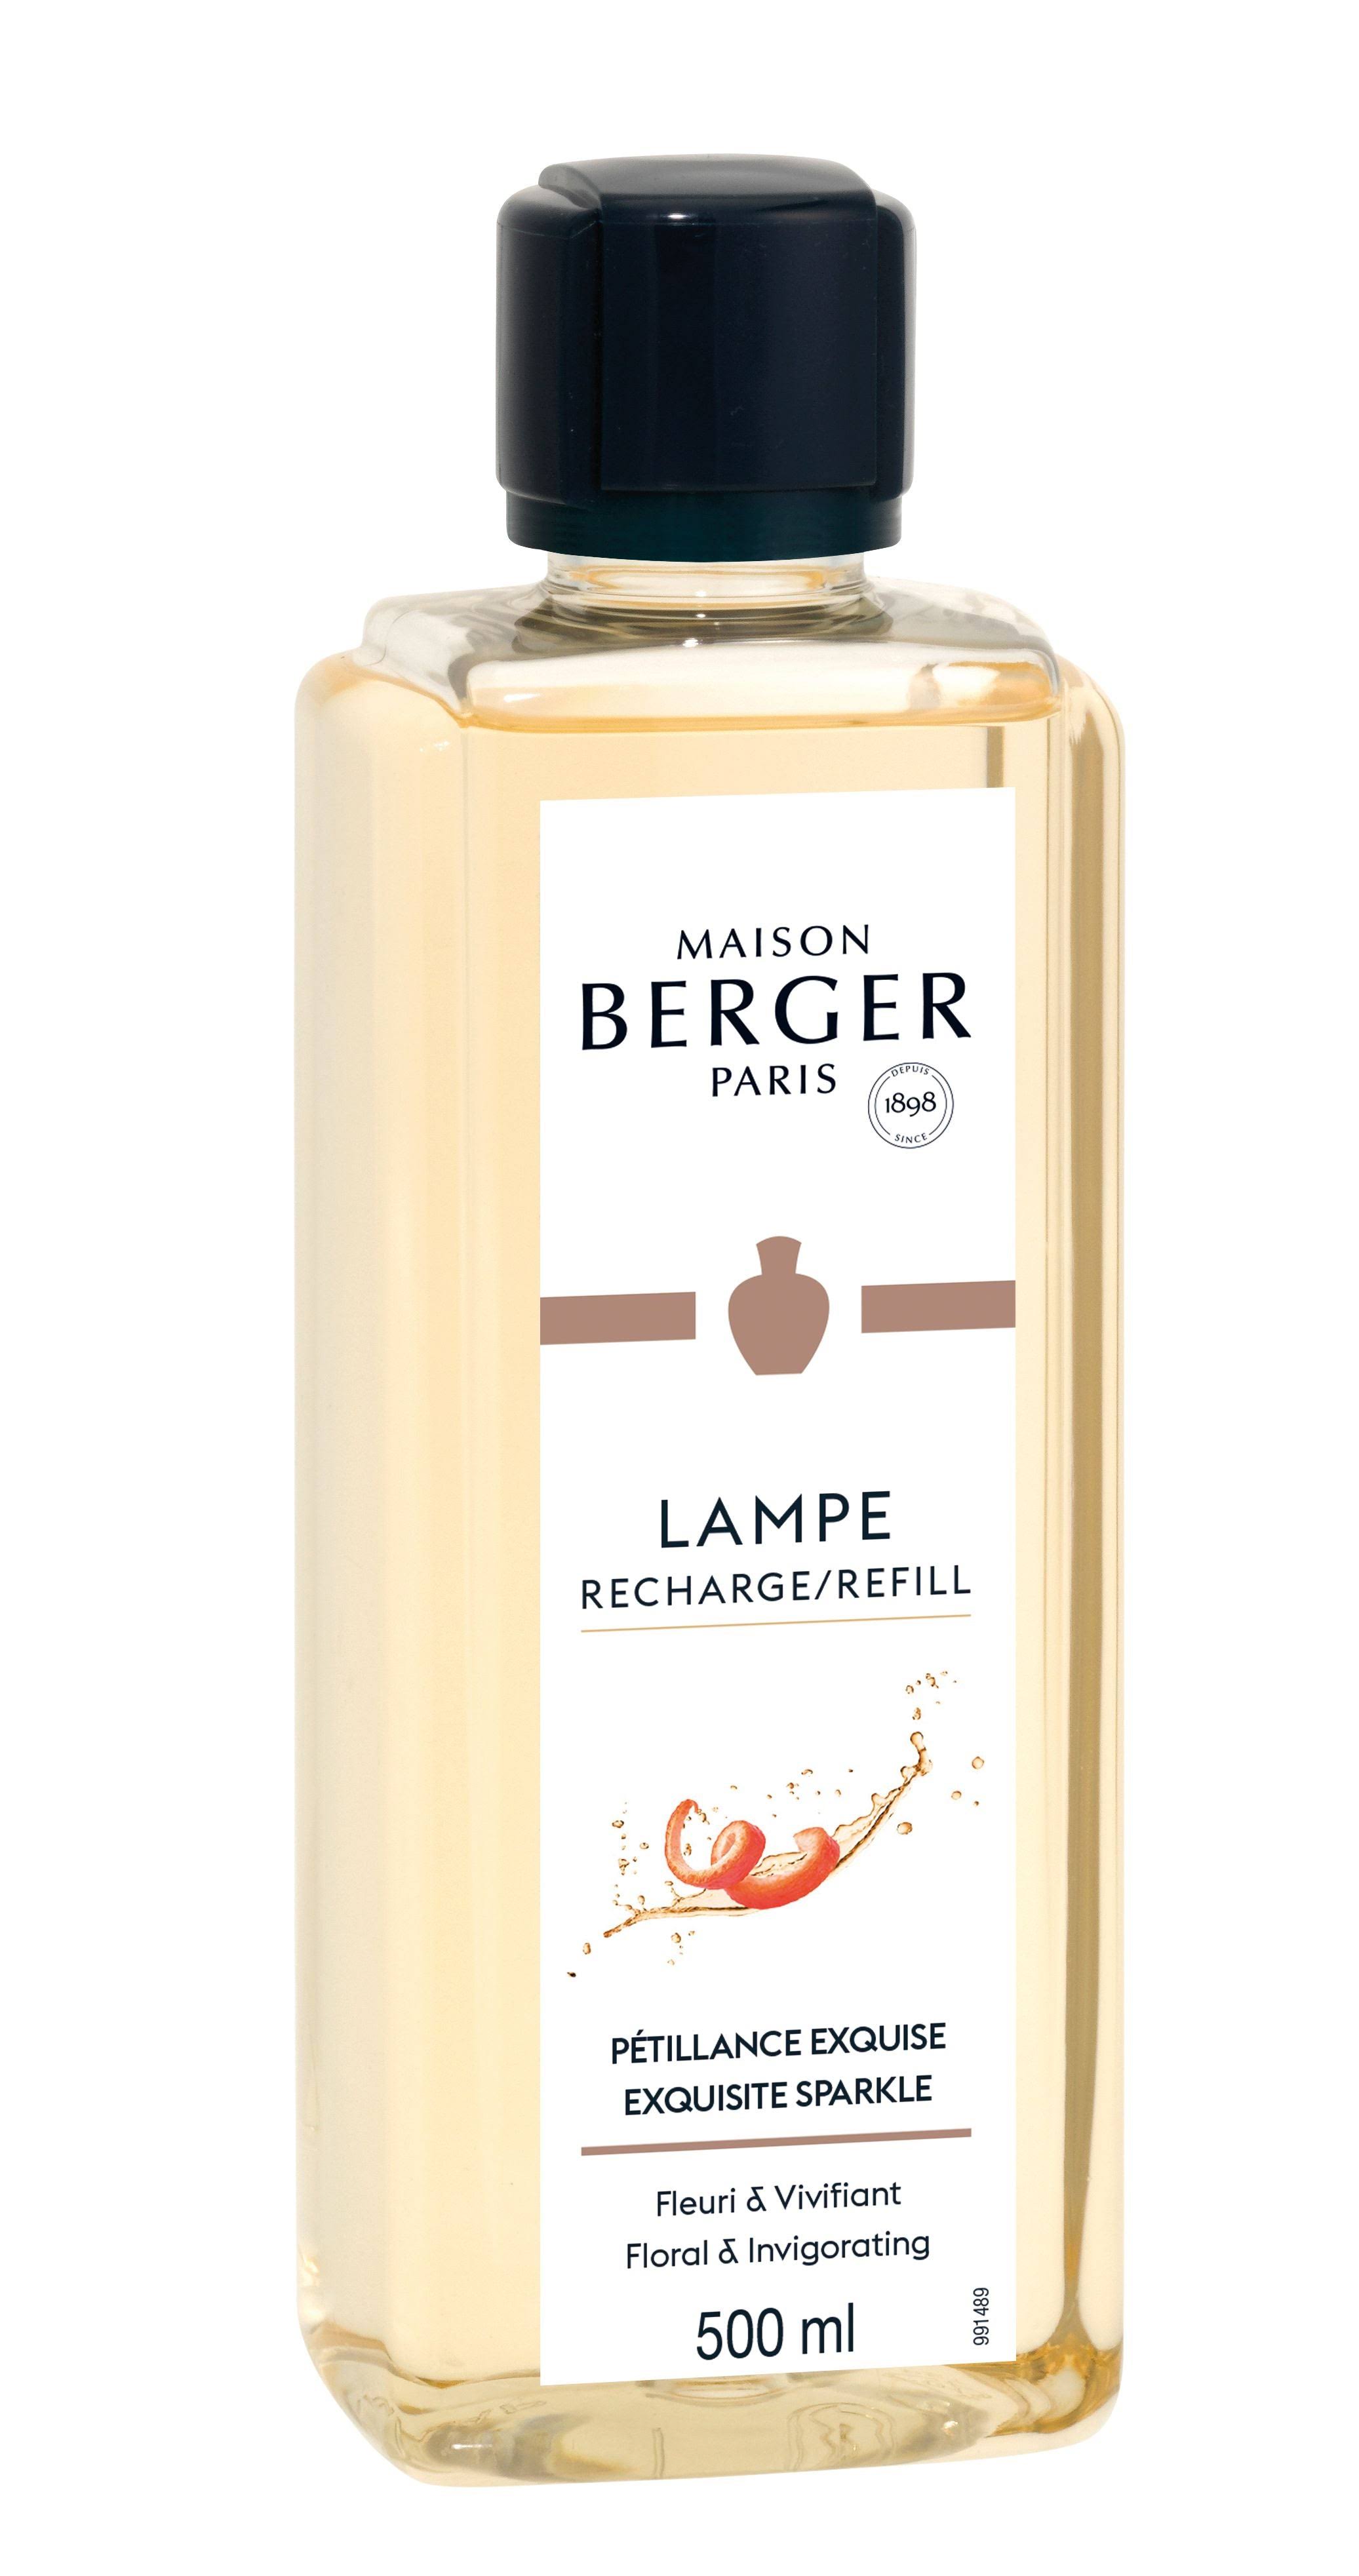 Maison Berger Fragrance Oil Lampe - Exquisite Sparkle, 500ml